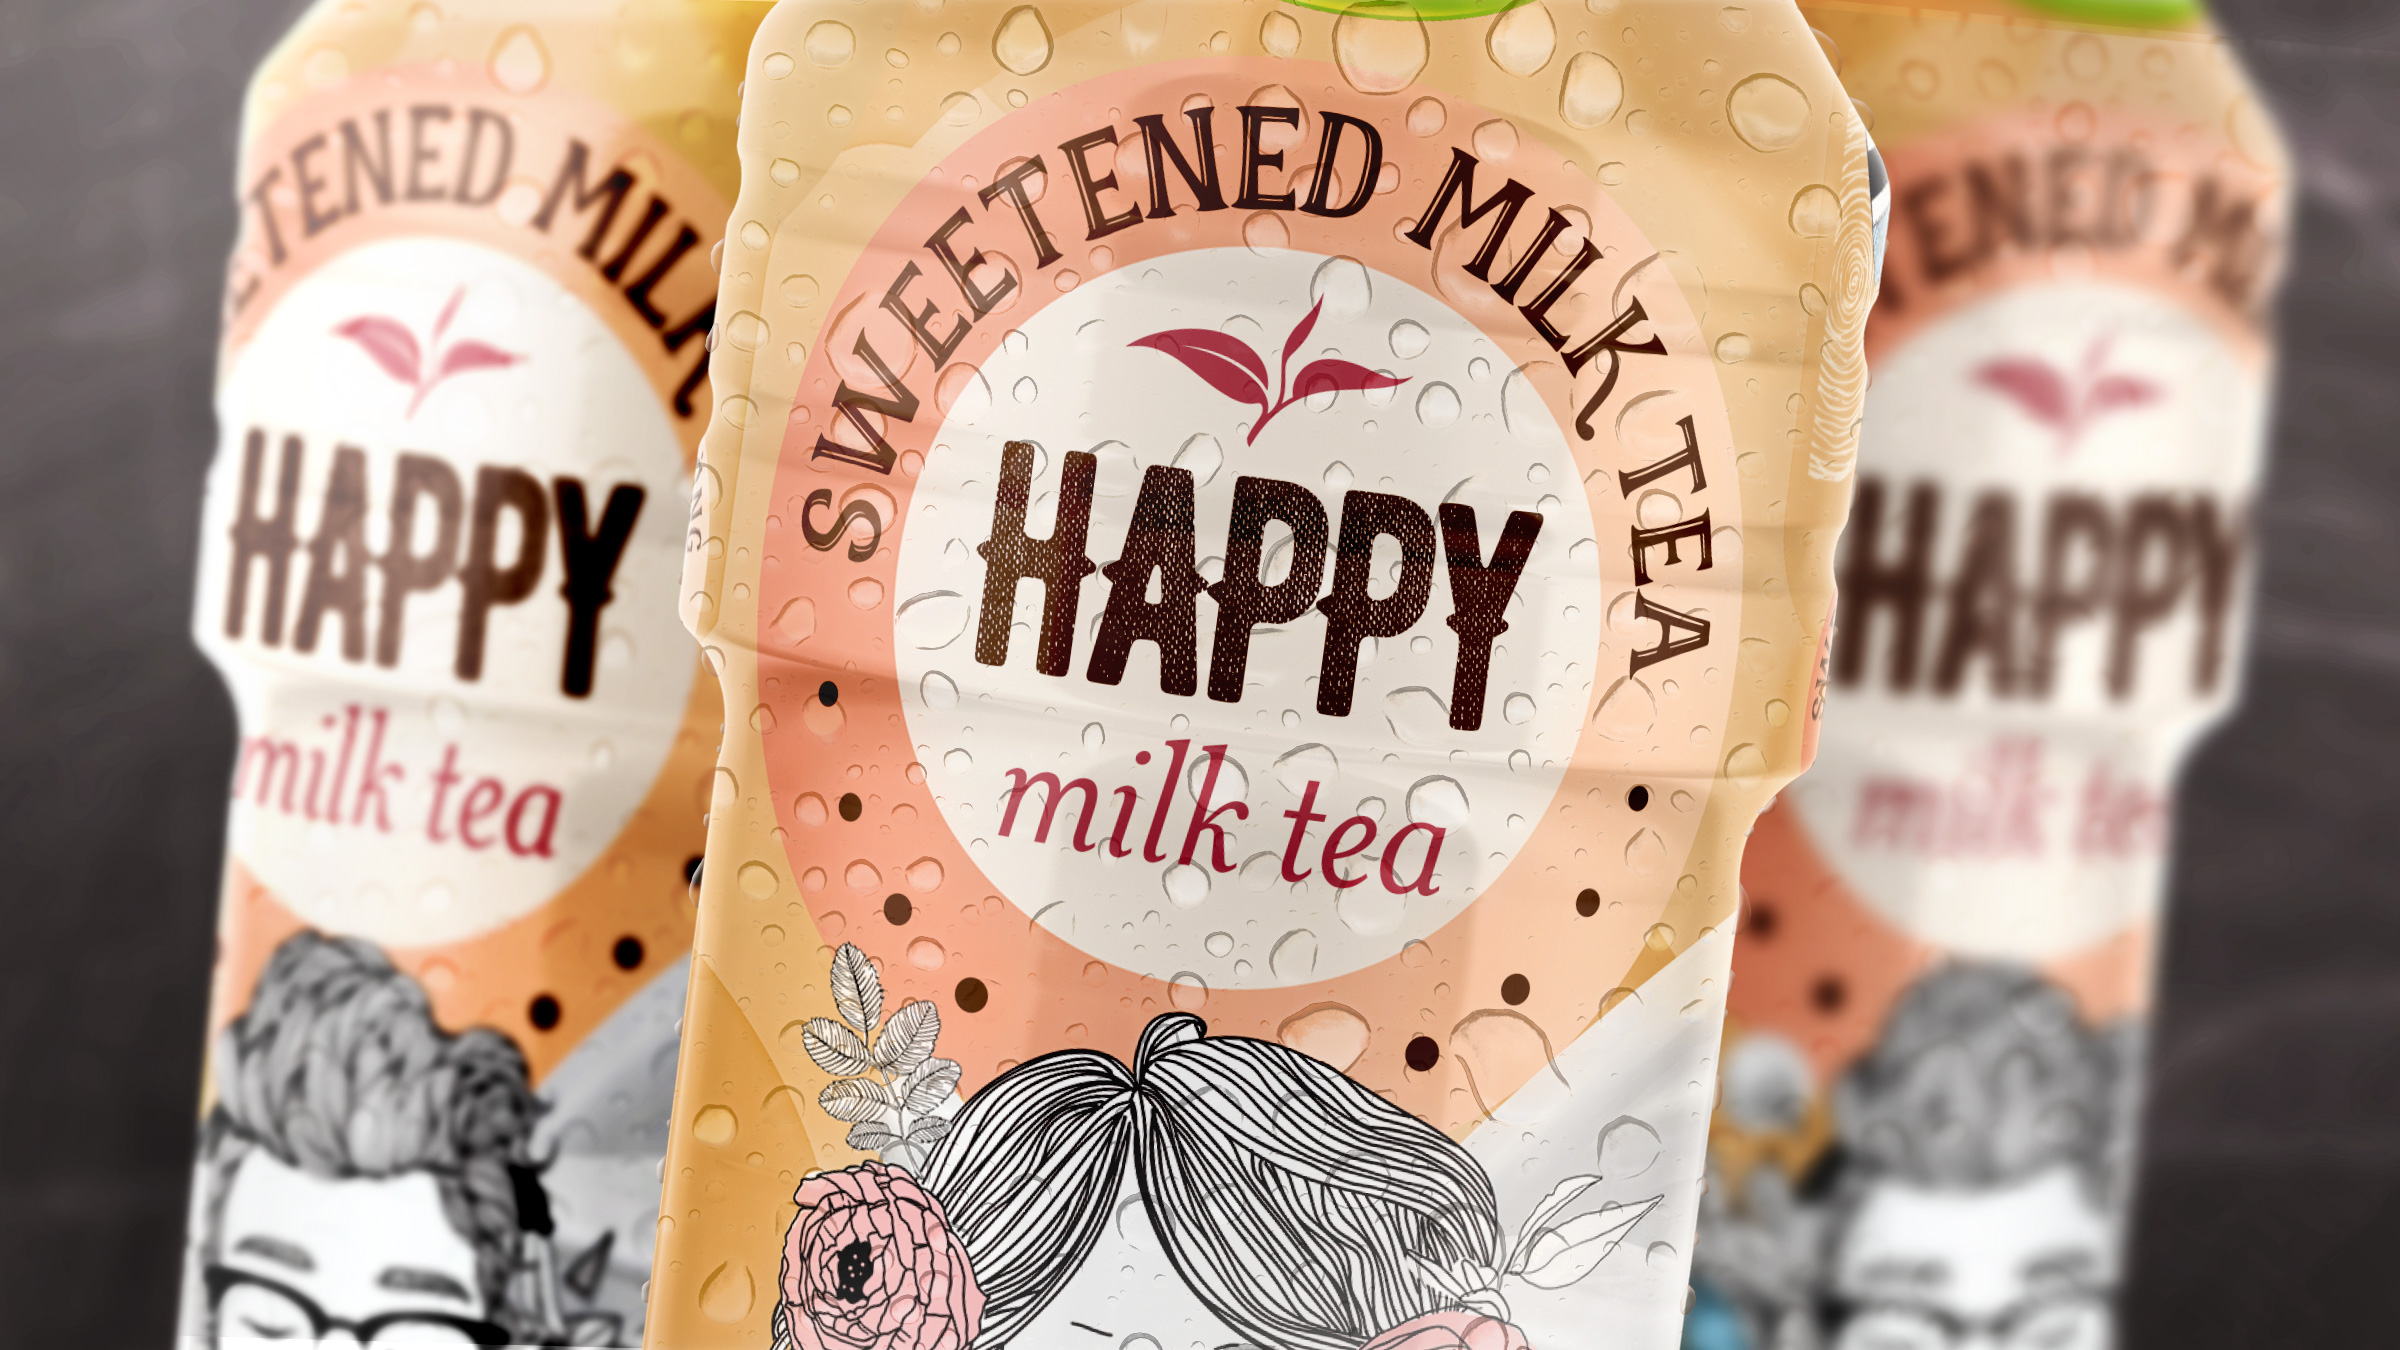 Milk Tea Packaging Design The Circle Branding Partners #circlebrandlife